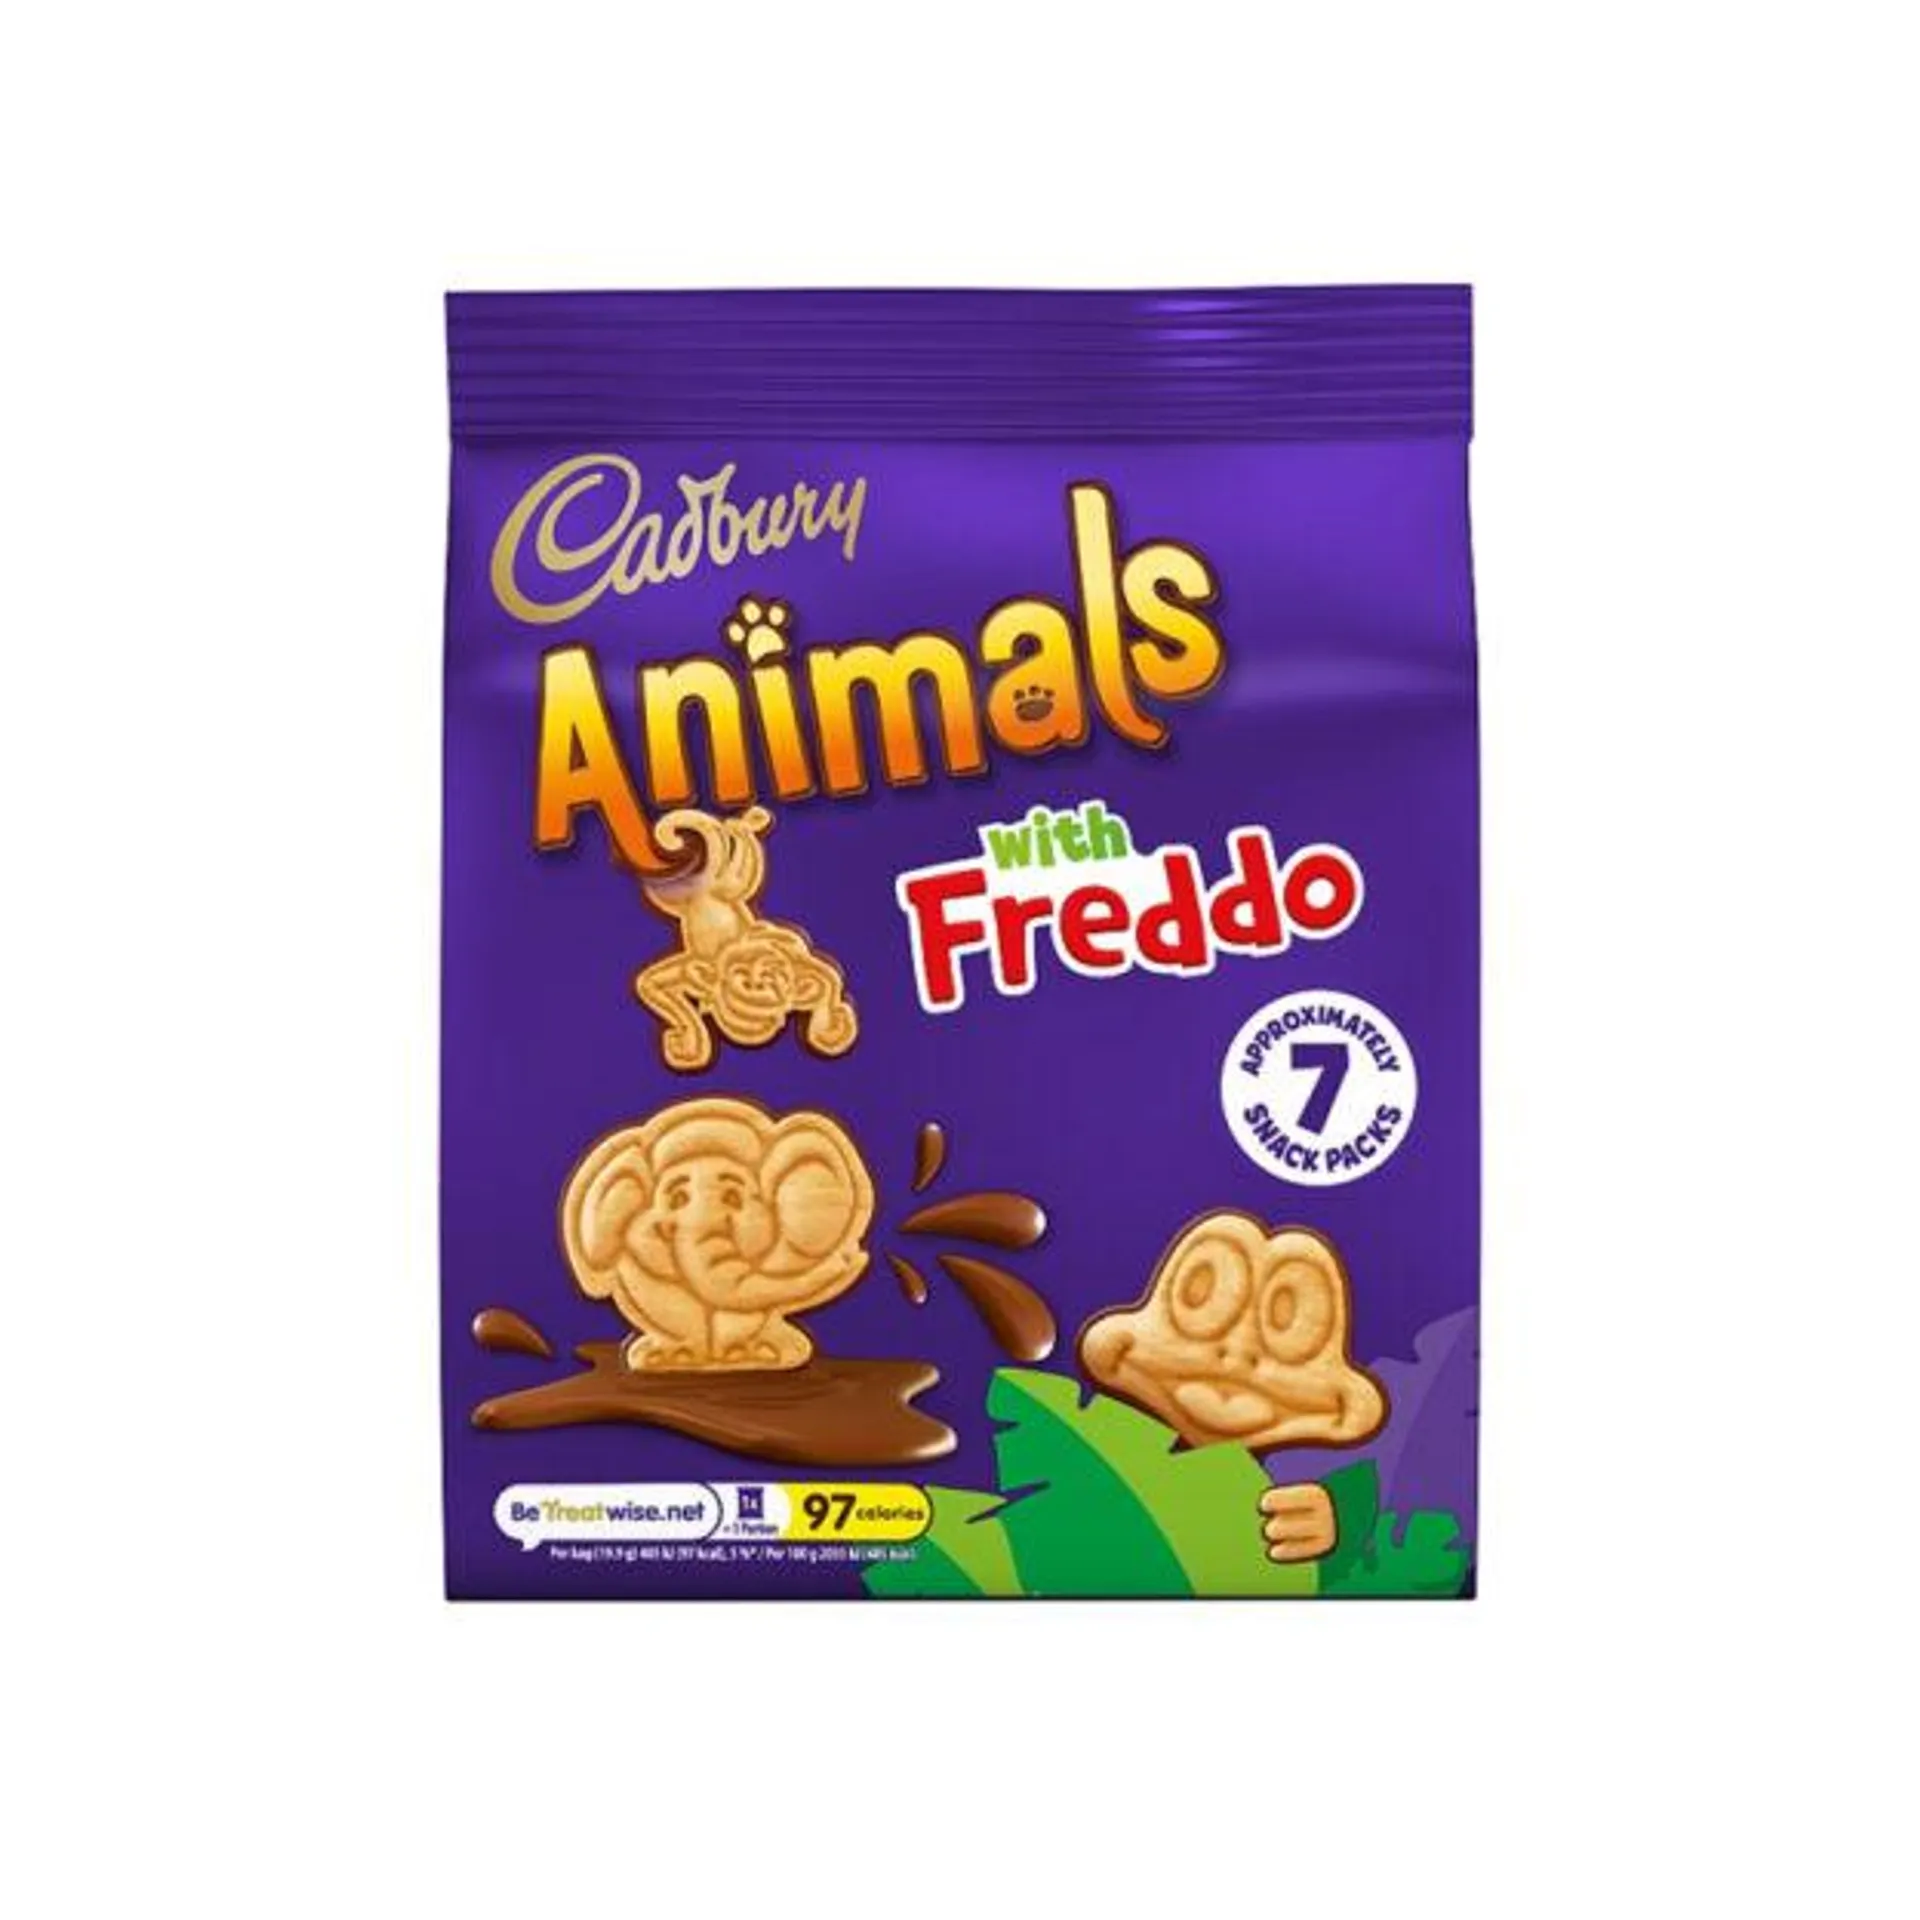 Ciastka Cadbury Animals